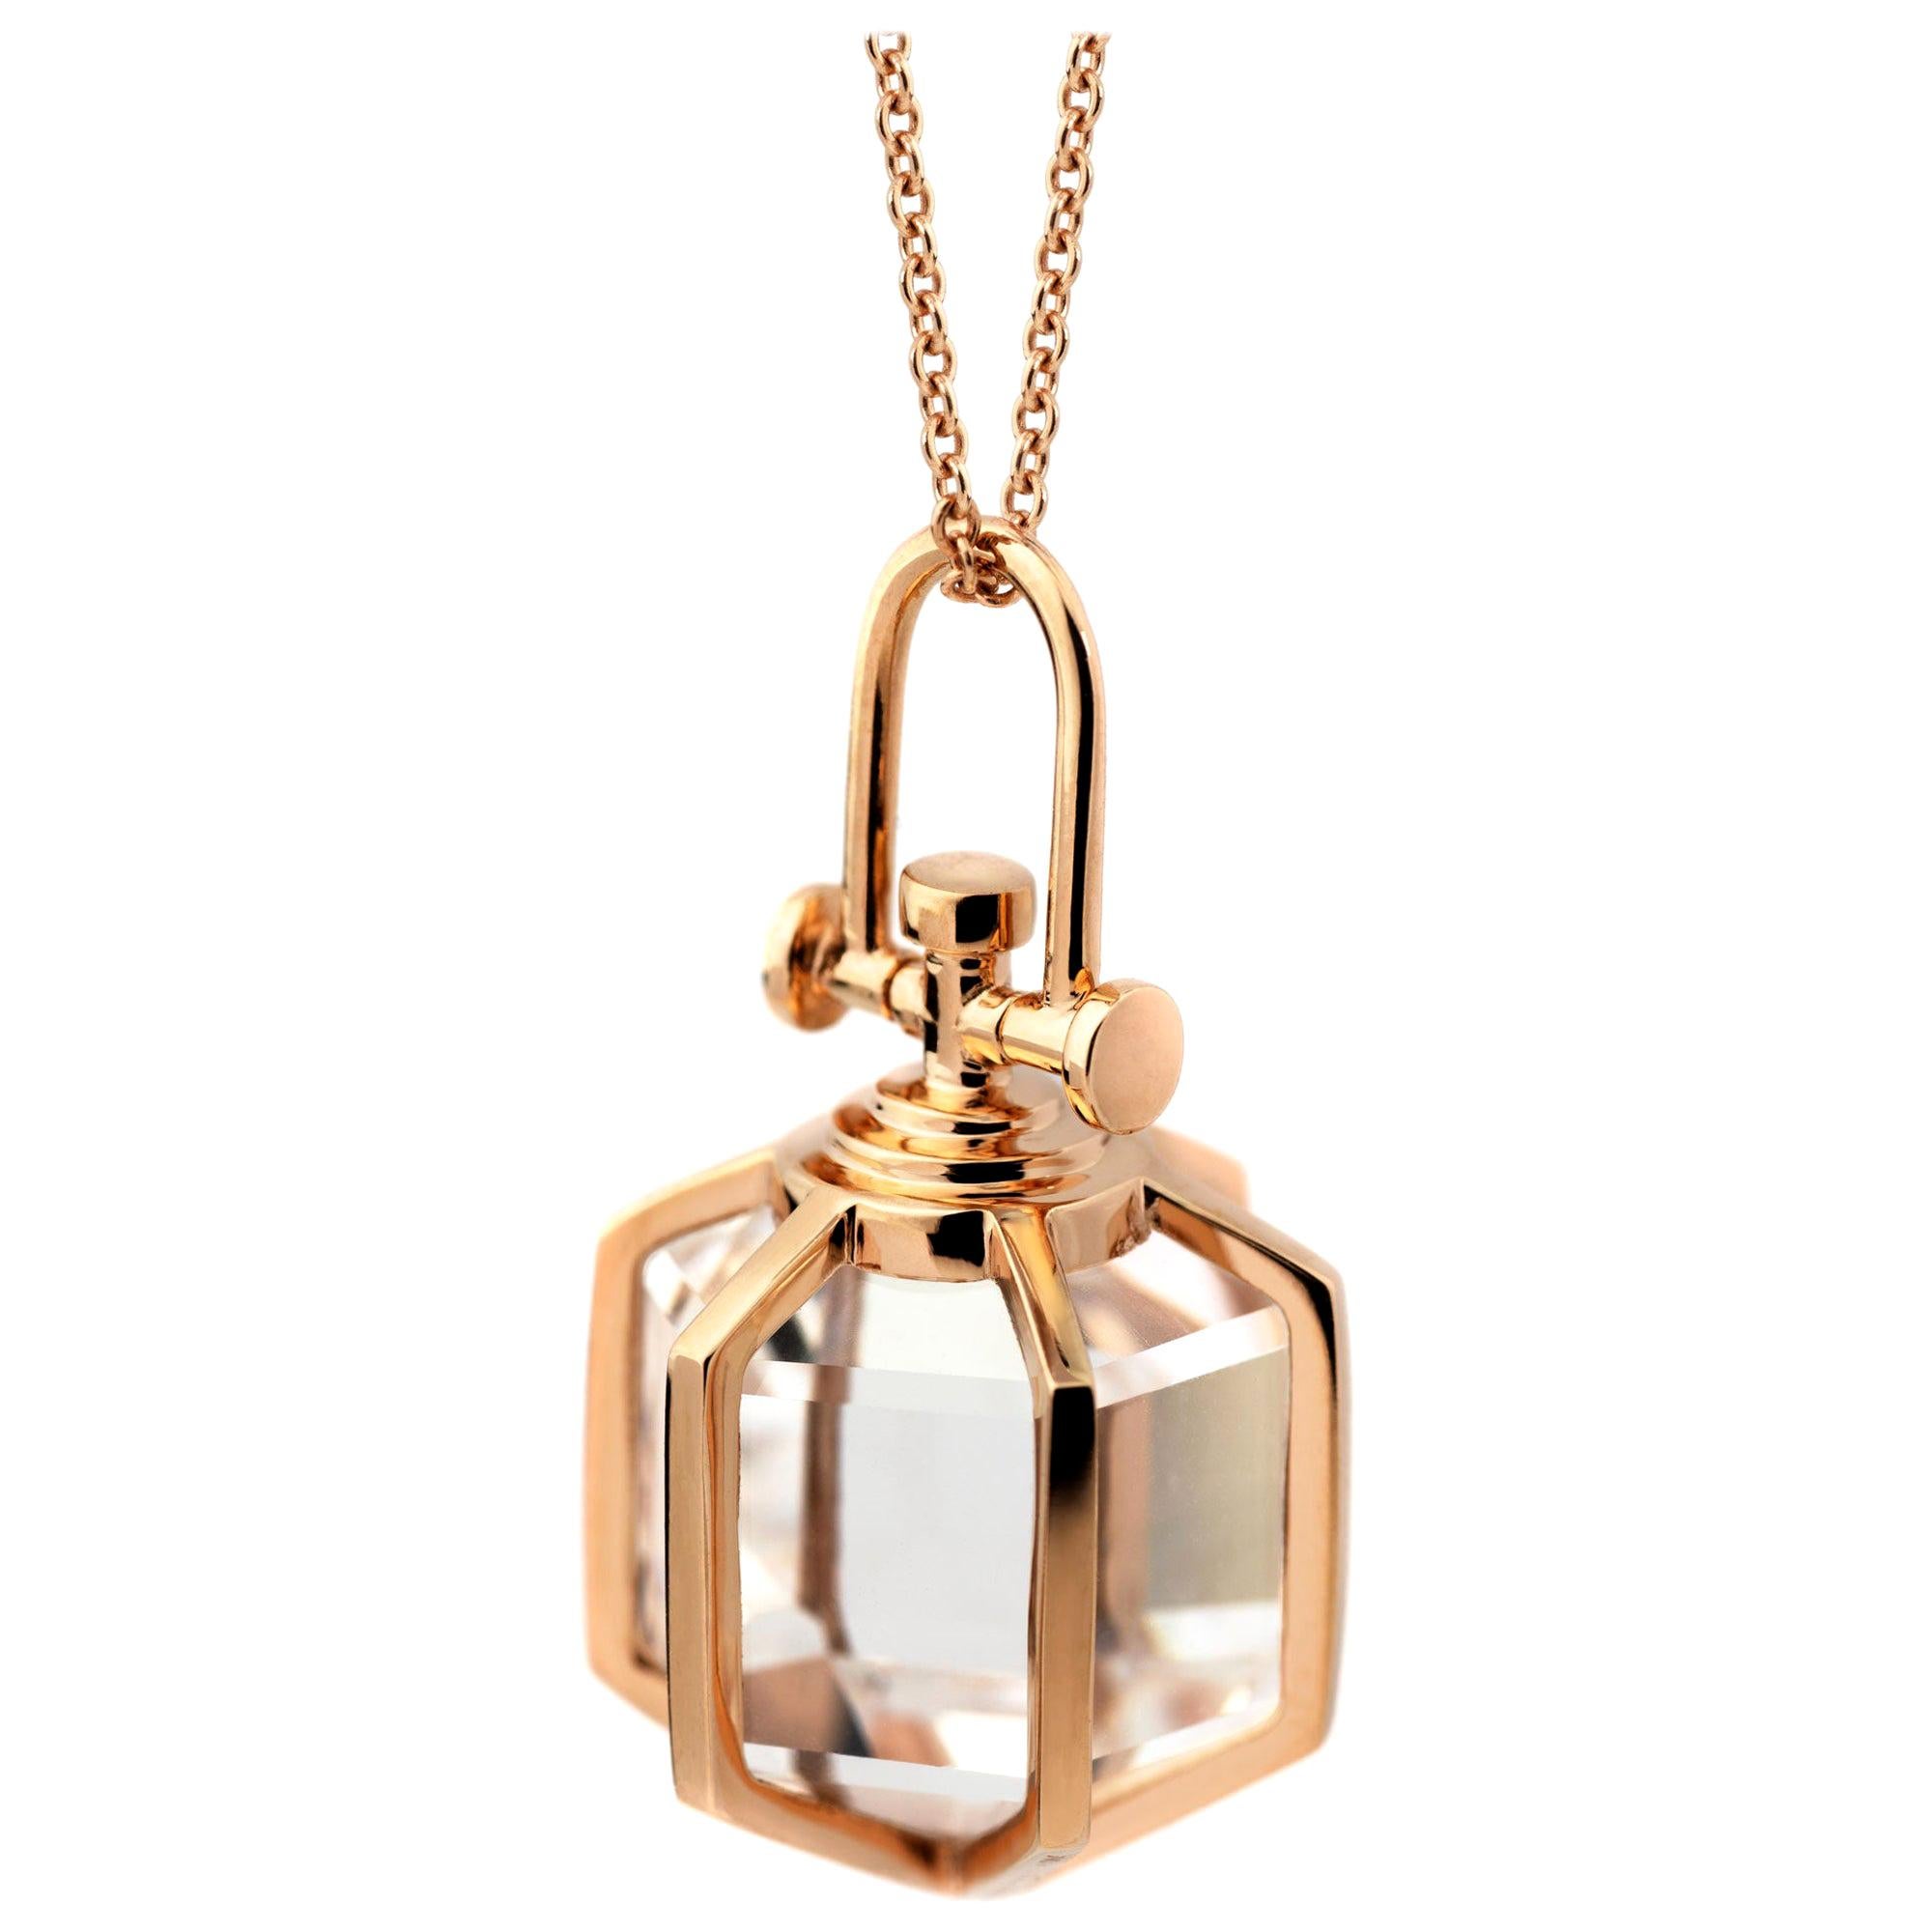 Rebecca Li Six Senses Talisman Necklace 18 Karat Gold Large Natural Rock Crystal